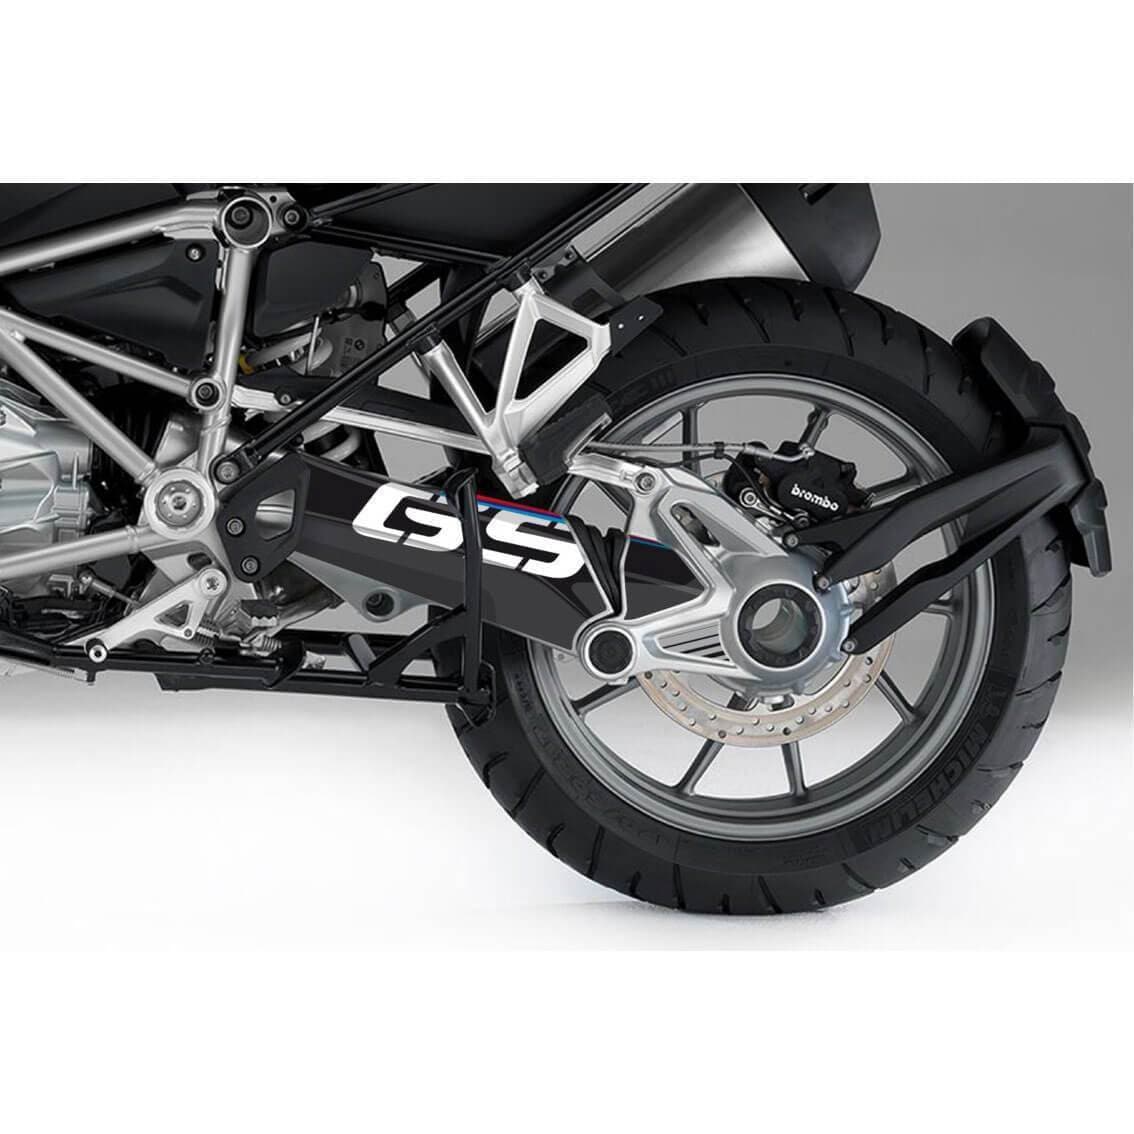 Puig Swing Arm Protectors | Black | BMW R1200 GS Adventure 2014>2018-M20153N-Swing Arm Protectors-Pyramid Motorcycle Accessories